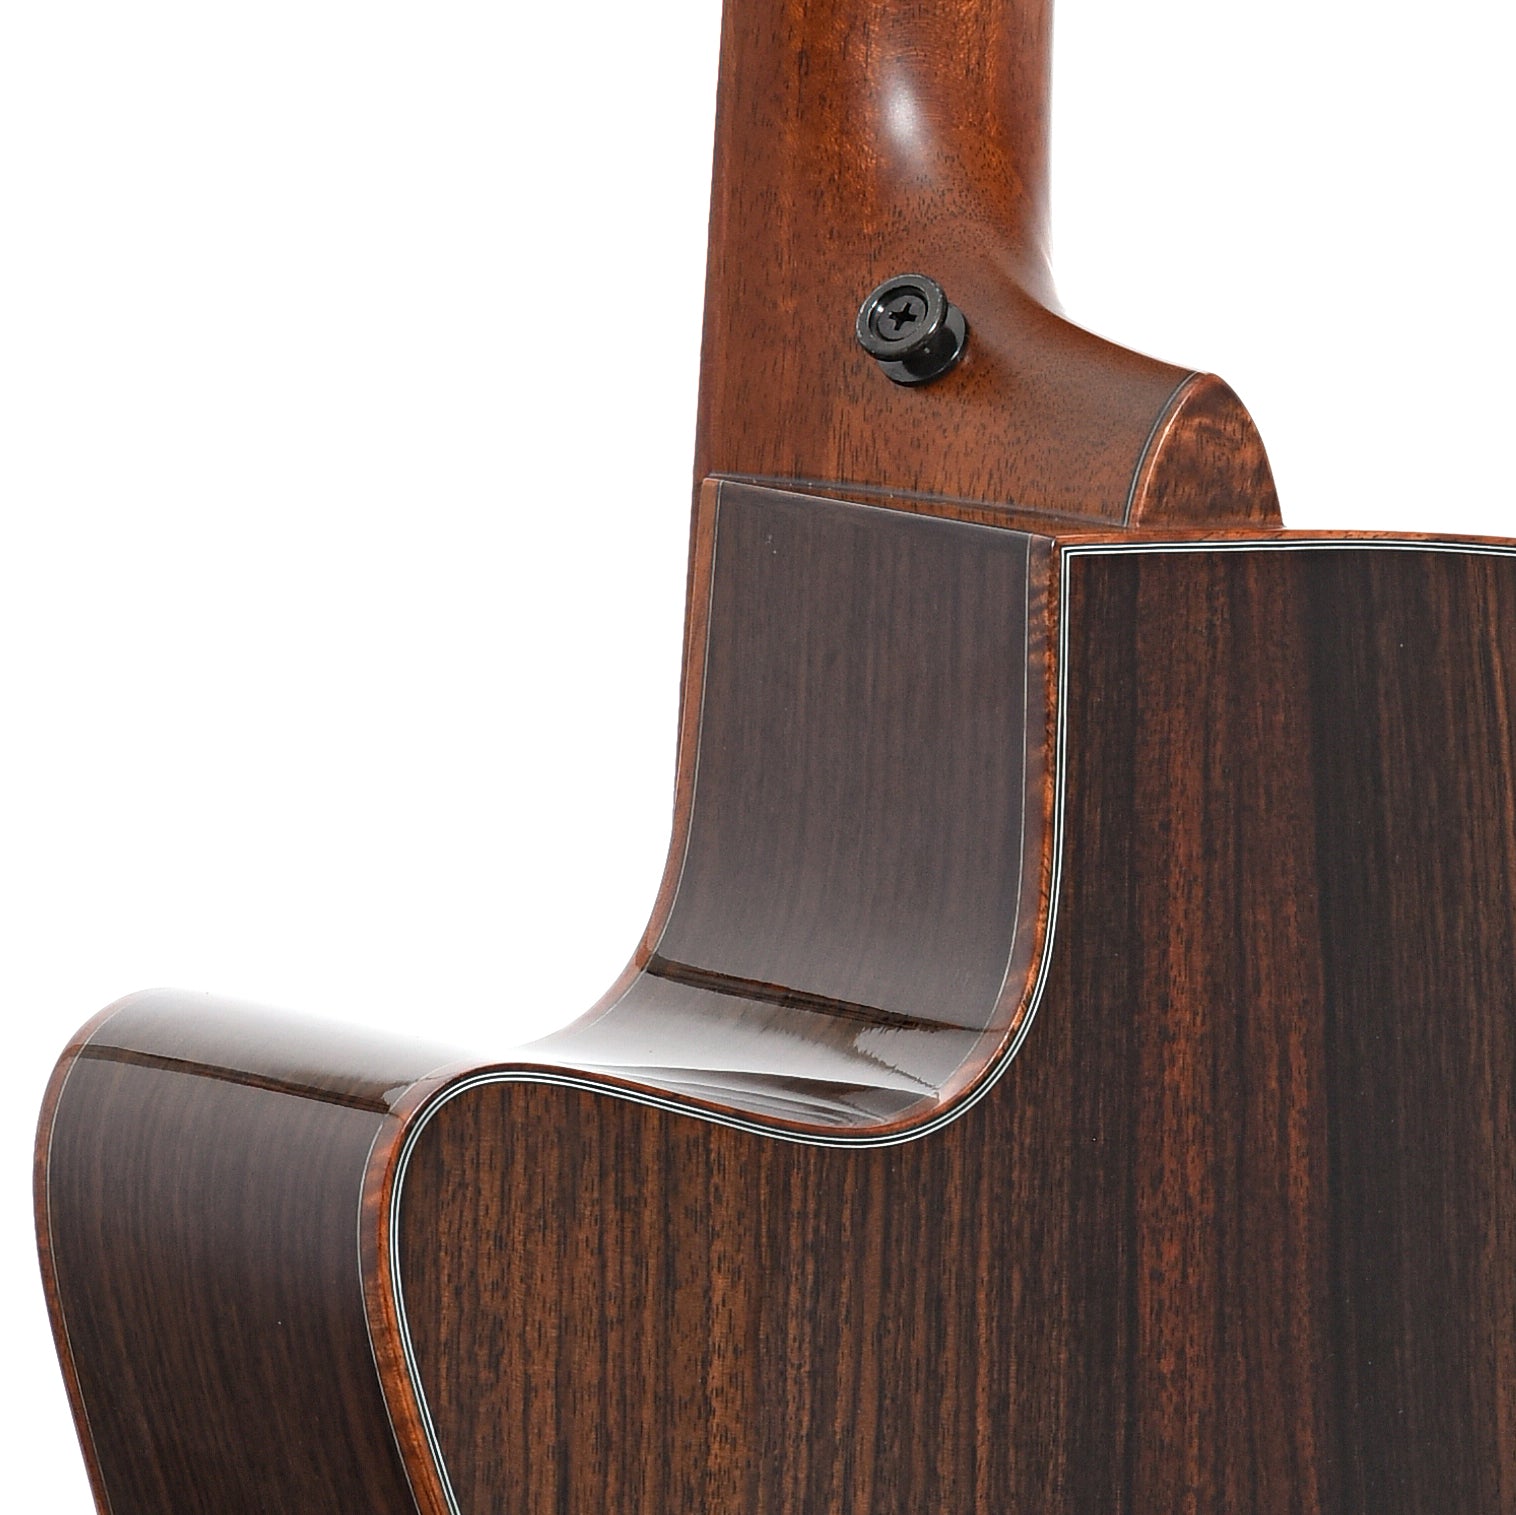 Heel of Morris S-101 III Grand Auditorium Acoustic Guitar (2011)